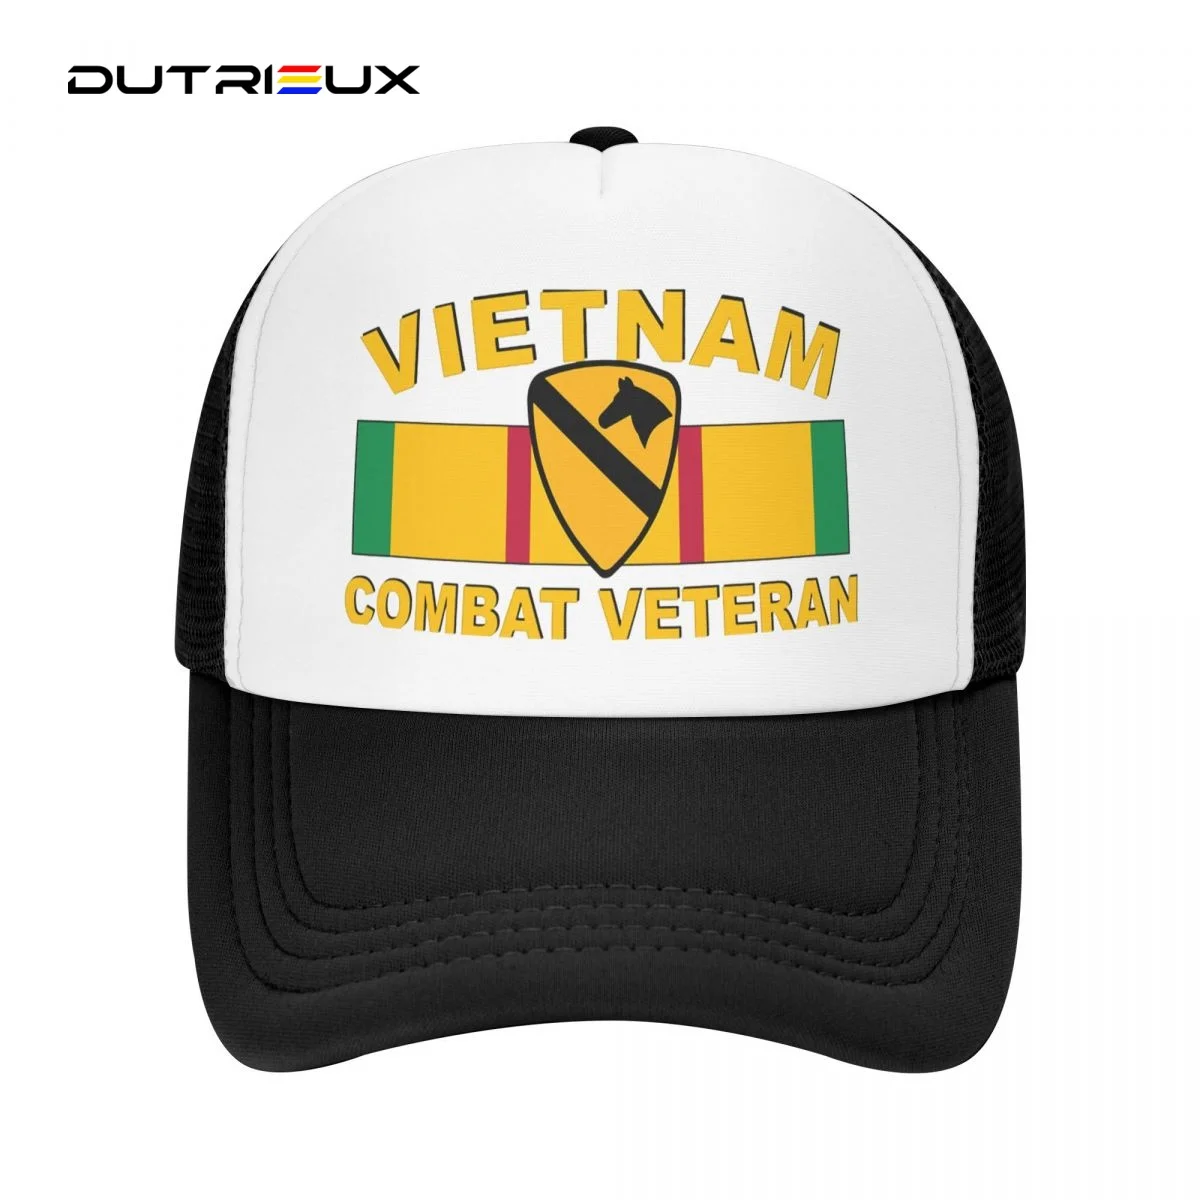 

Us Army 1st Cavalry Division Vietnam Combat Veteran Outdoor Sport Cap Baseball Cap Men Women Adjustable Cap Fashion Summer Hat